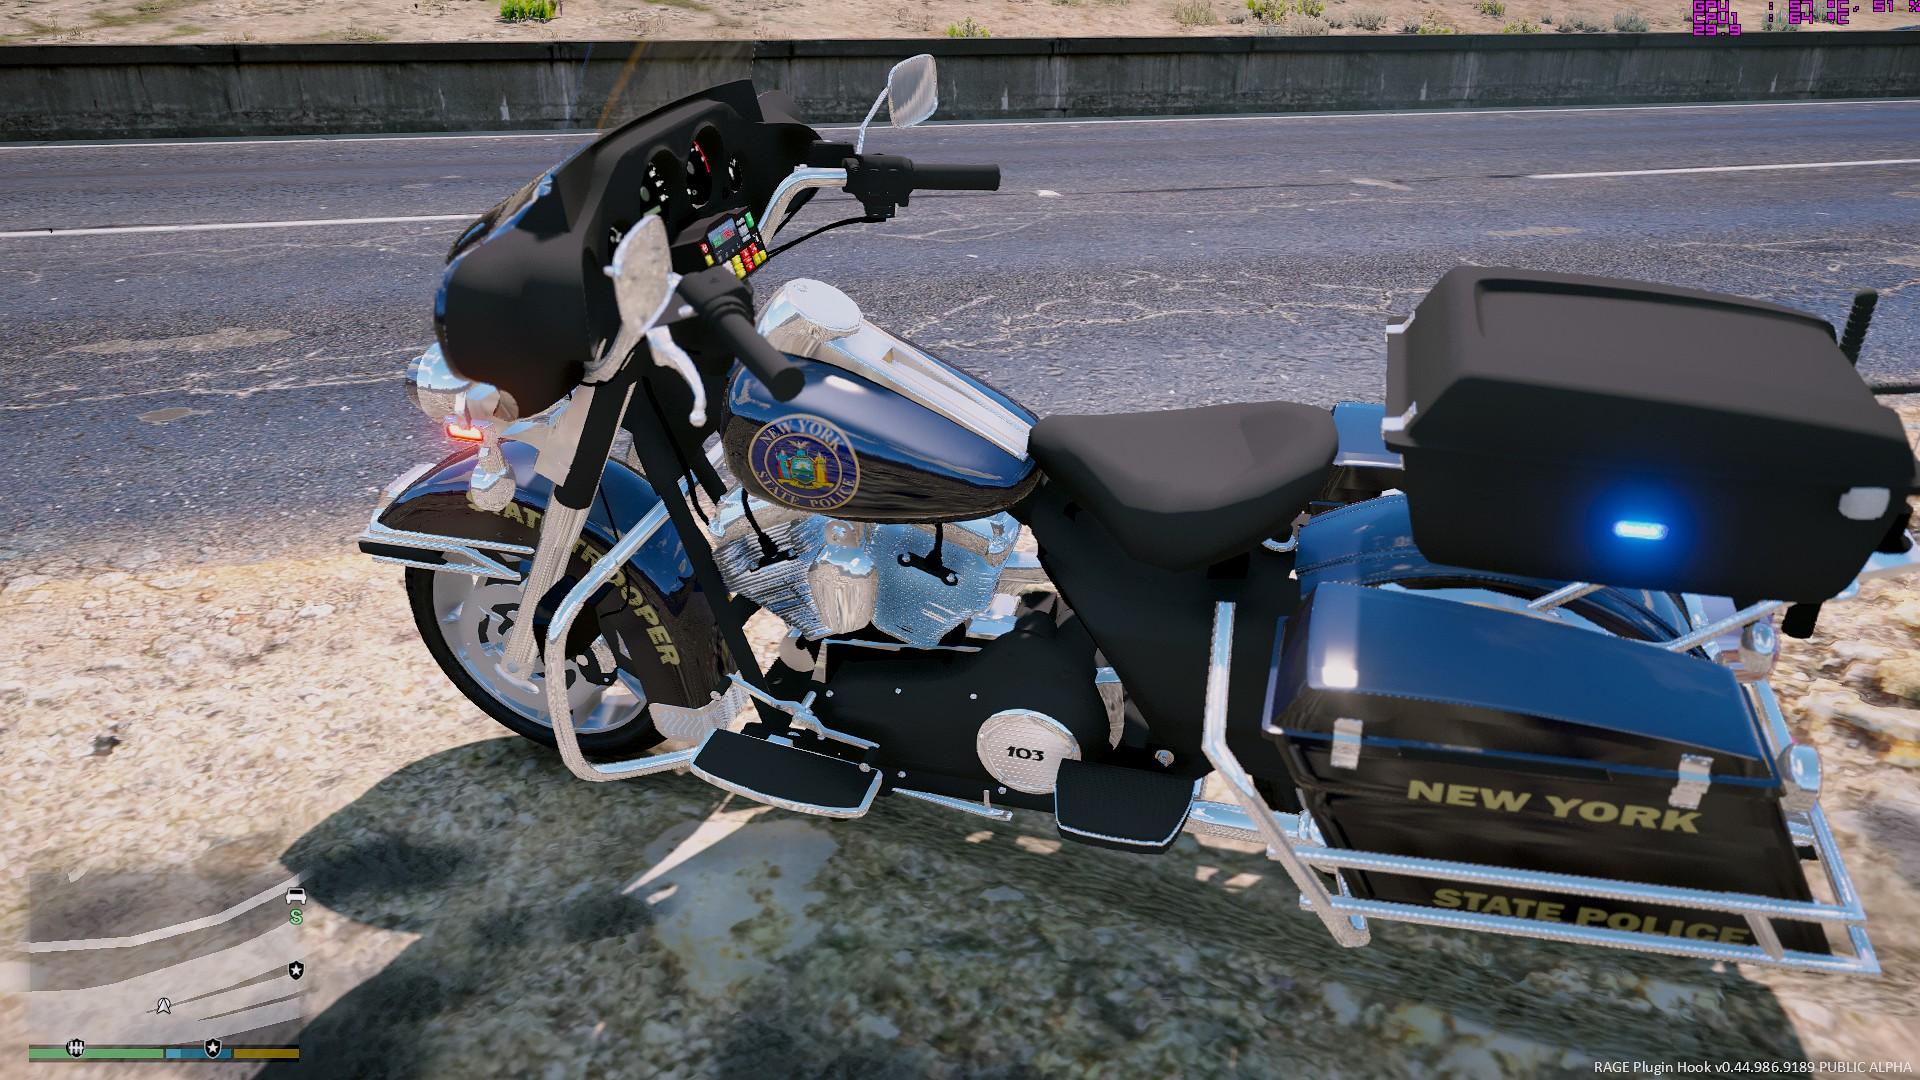 2013 CHP Harley Davidson New York  State Police GTA5 Mods com